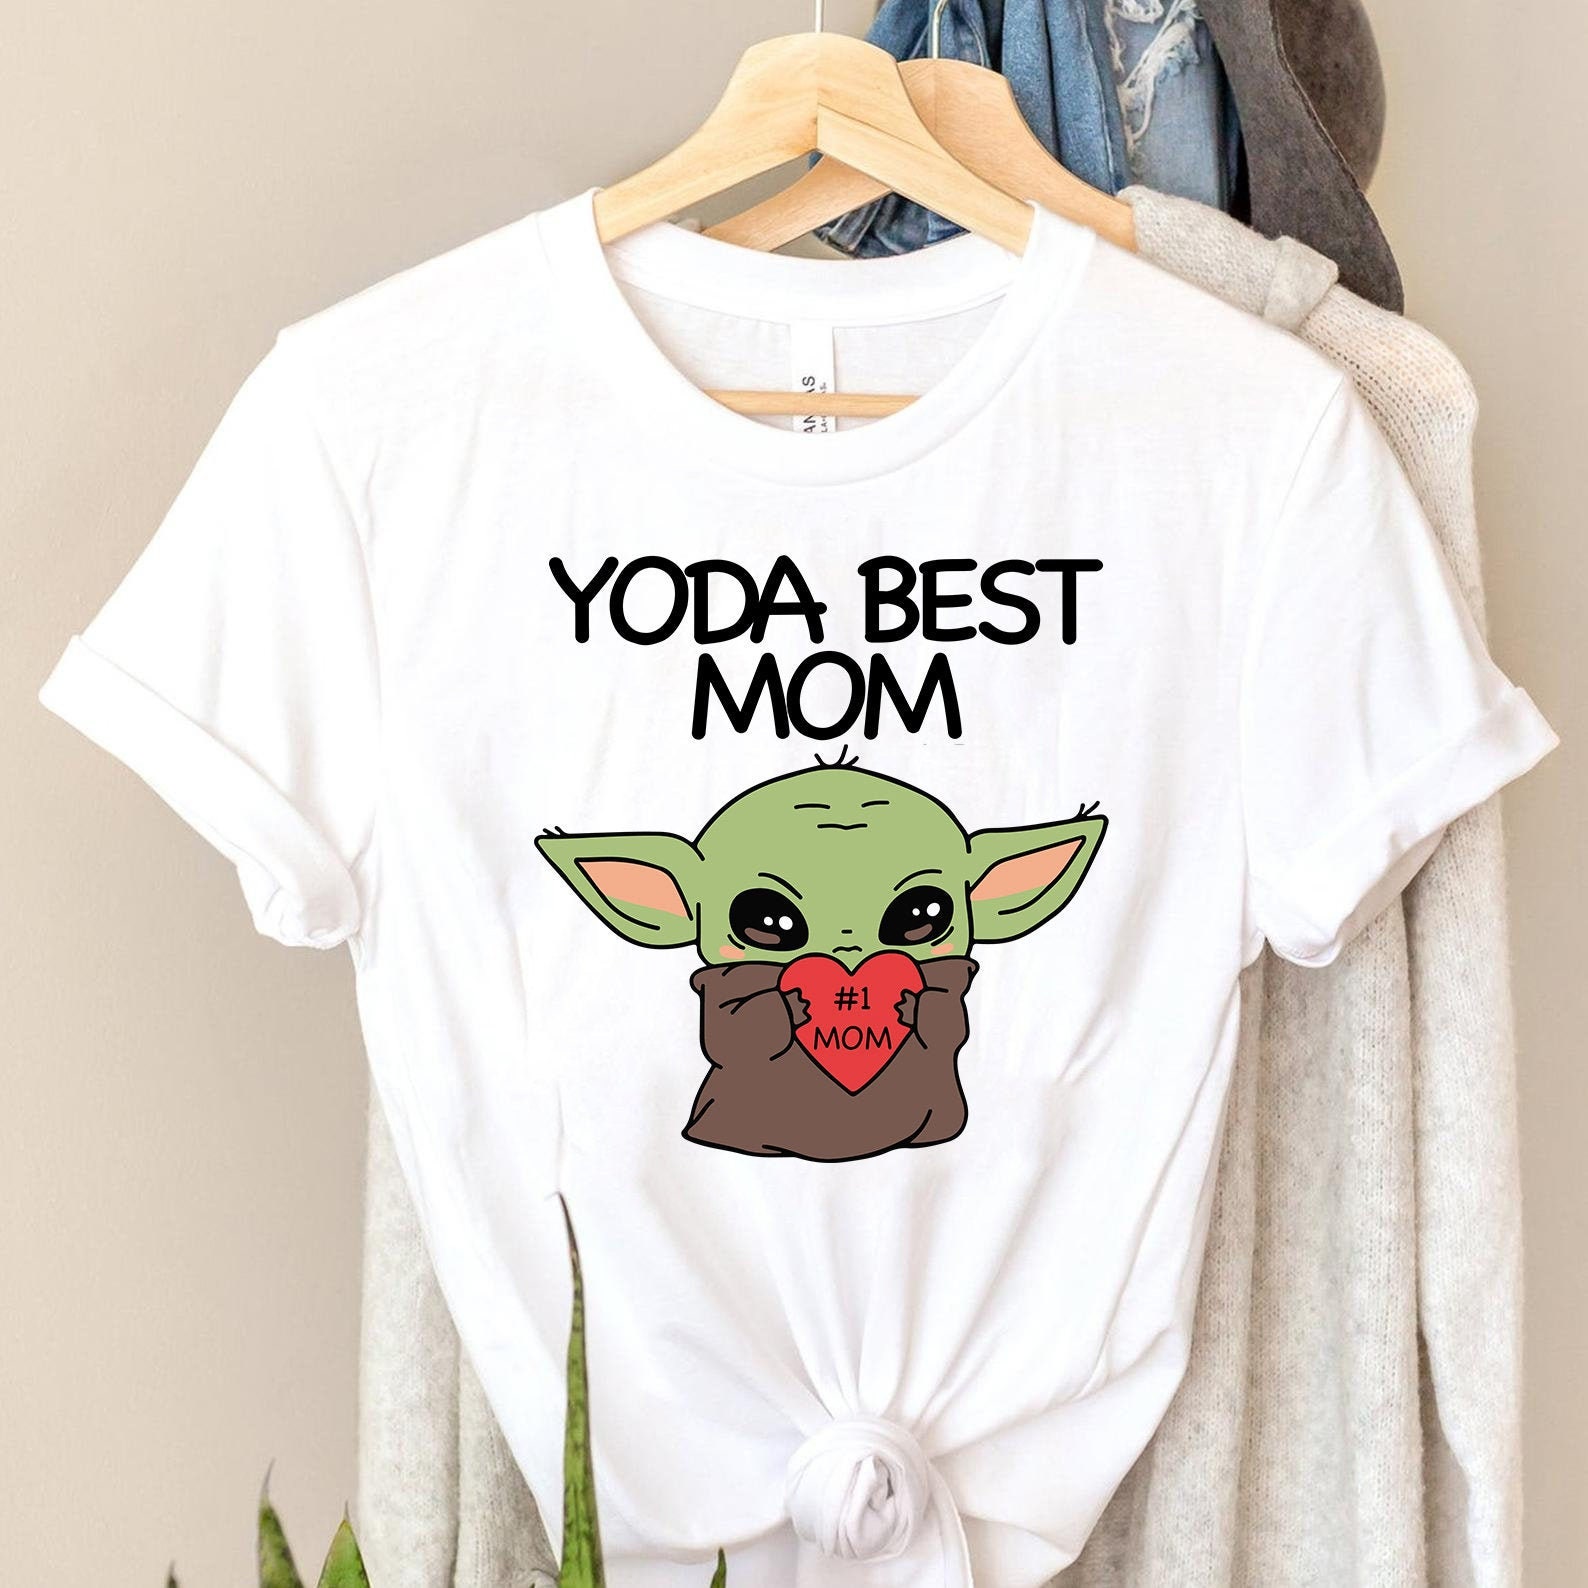 Yoda Best Mom T Shirt Baby Yoda Shirt Cute Mom Shirt Mothers Day Shirt Worlds Best Mom Mom Shirt Mothers Day Gift Baby Yoda Mom Tee Plus Size Up To 5xl